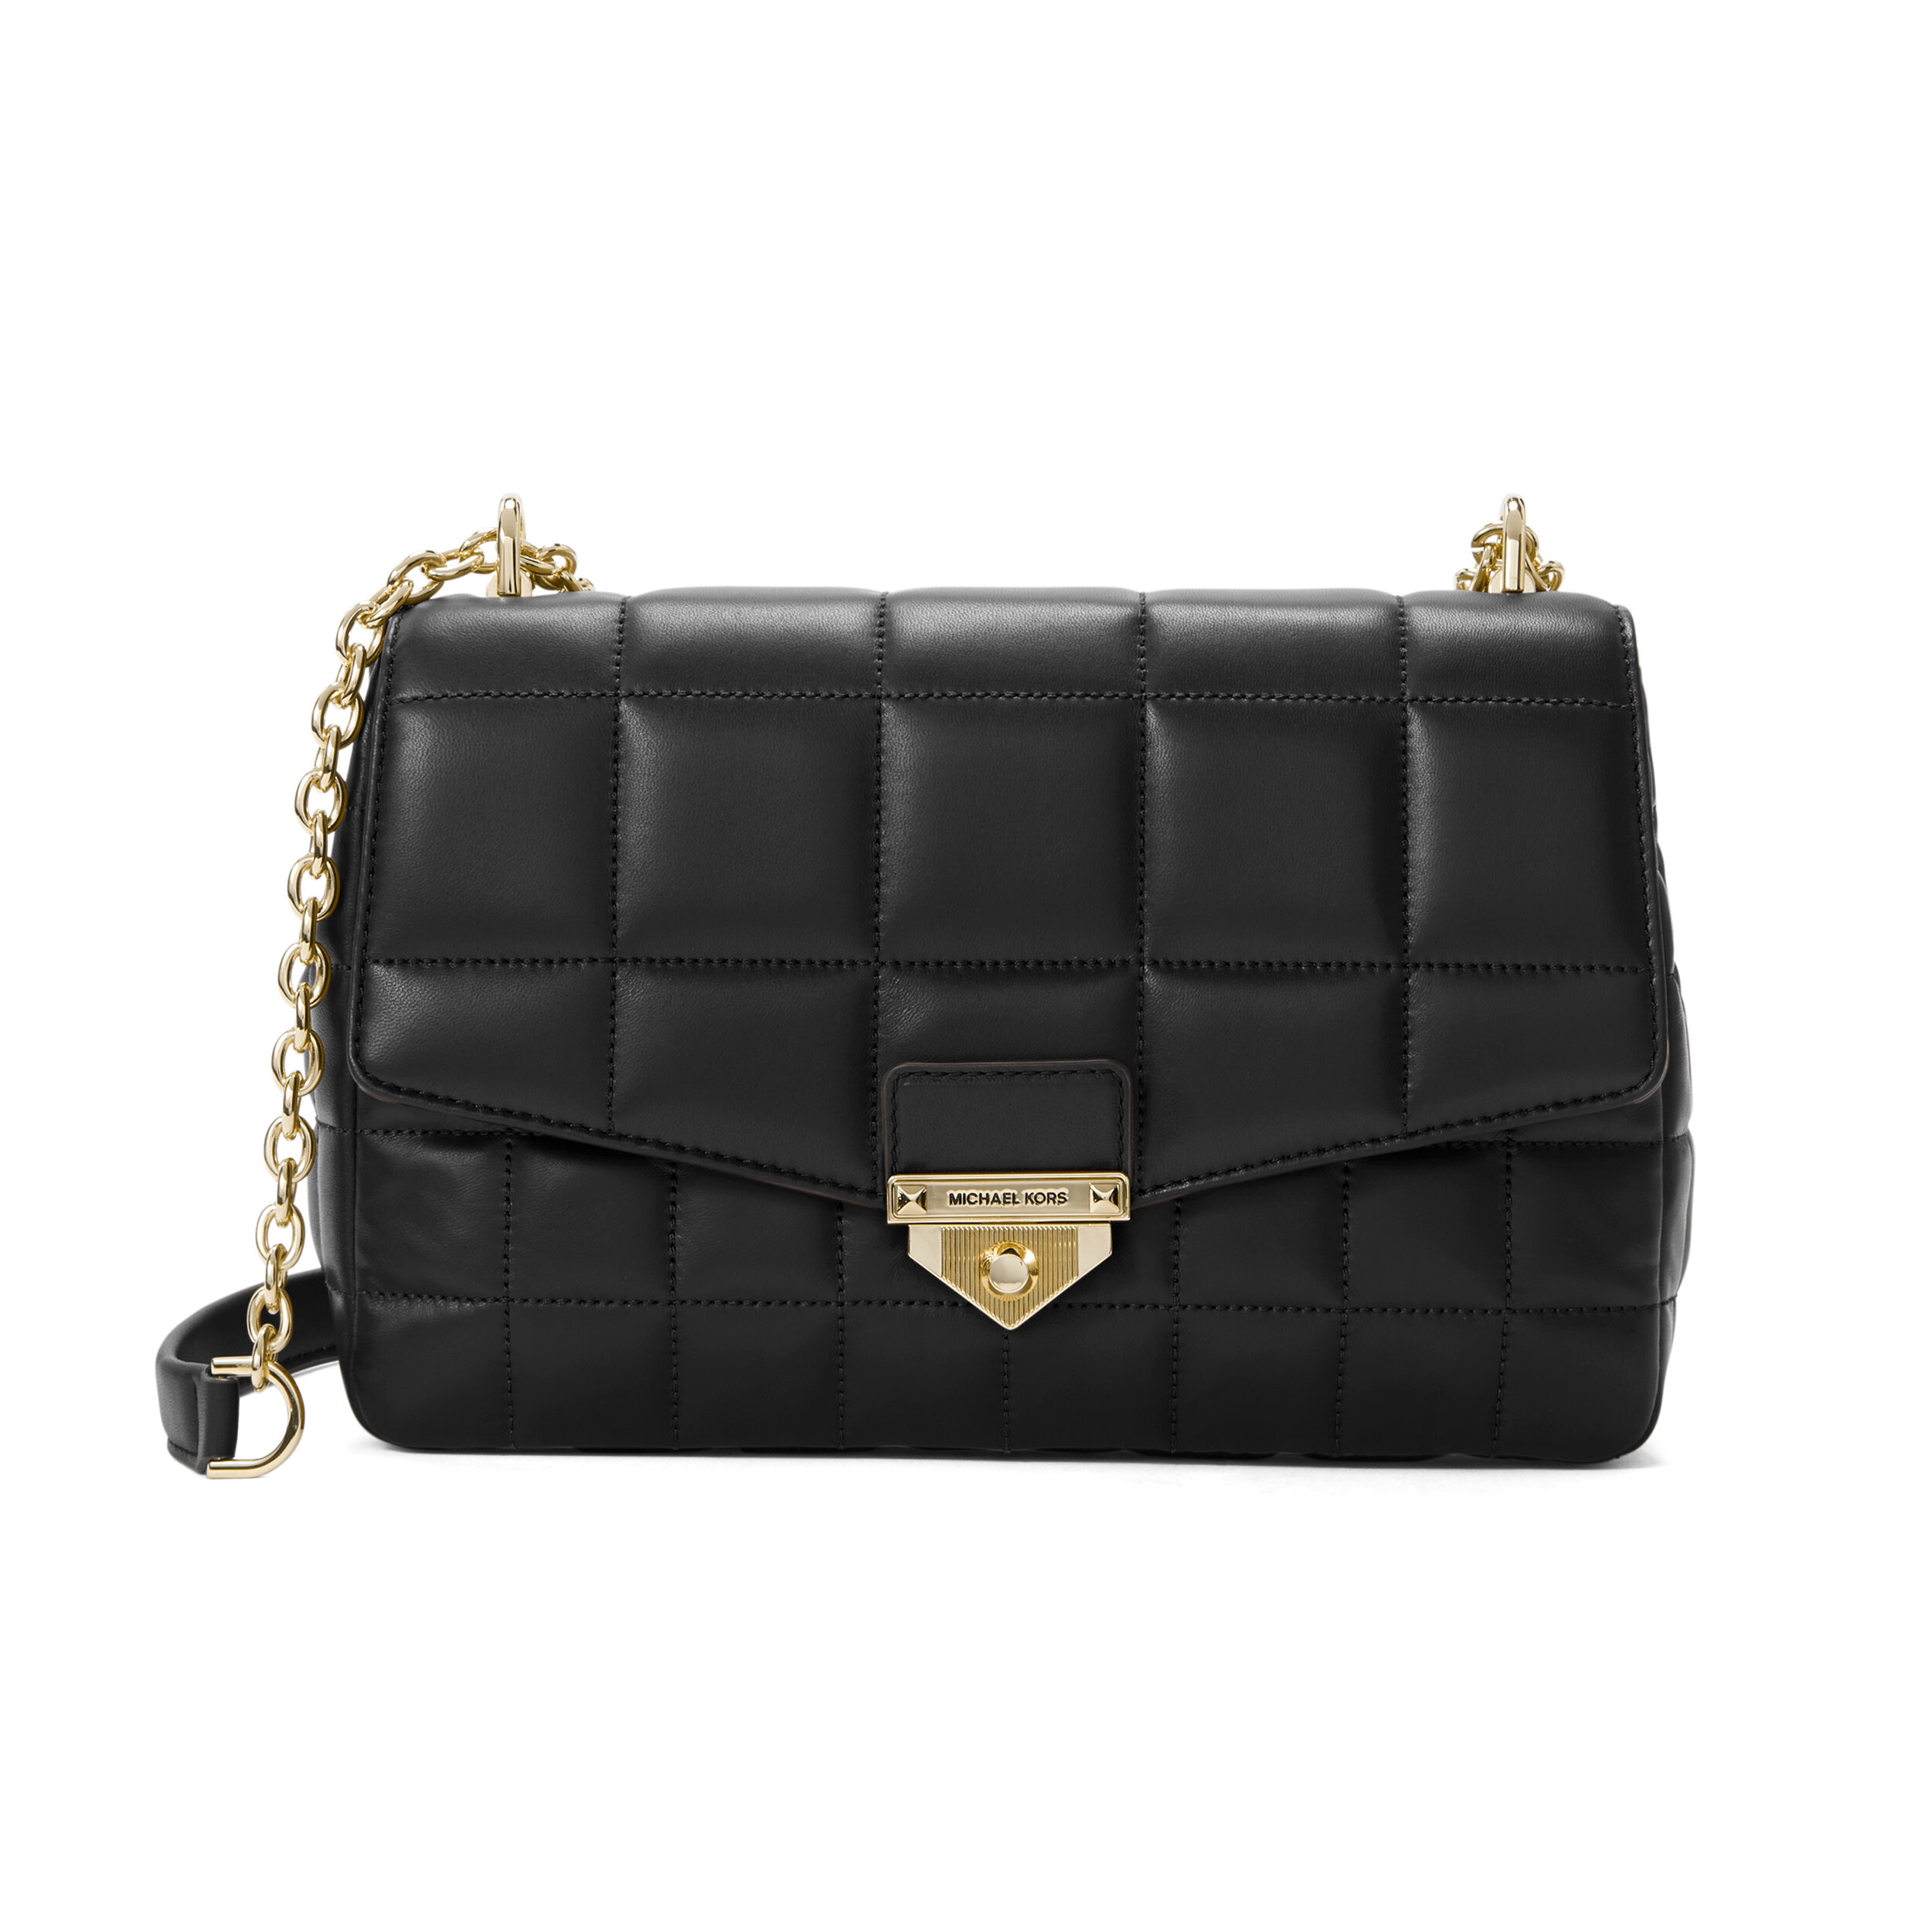 210 Best Replica Handbags ideas | handbags michael kors, michael kors bag, purses  michael kors